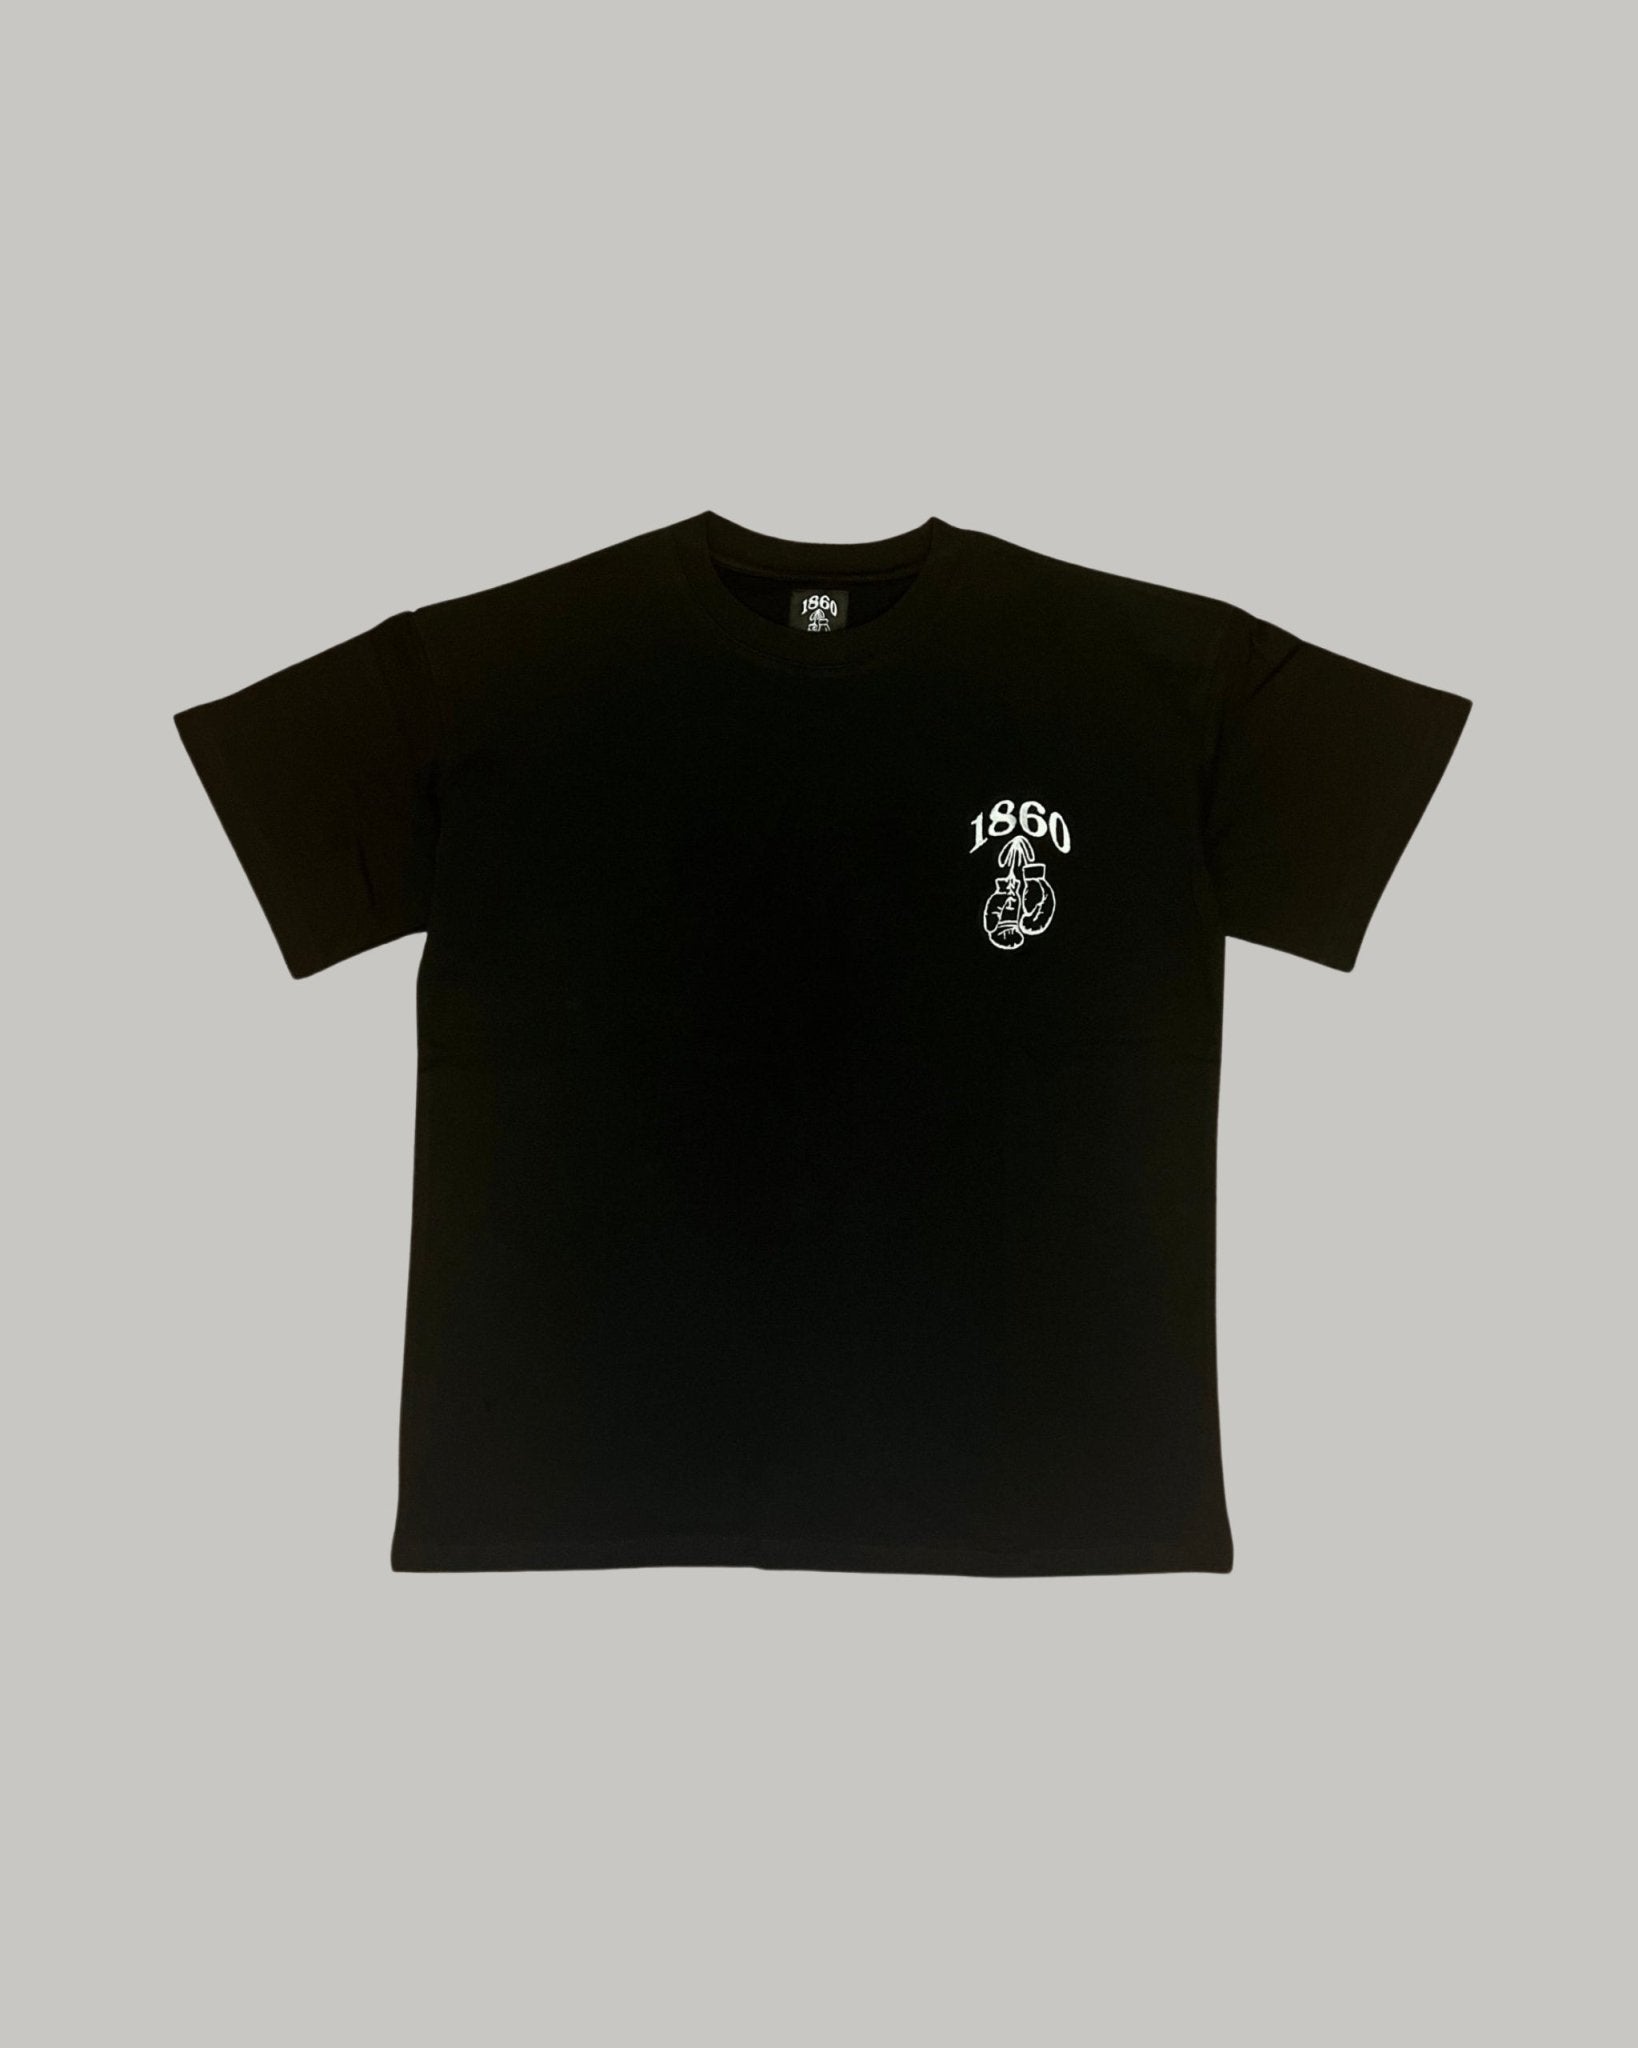 Premium 1860 Boxen schwarzes Oversize Shirt - 1860Boxen - Shop